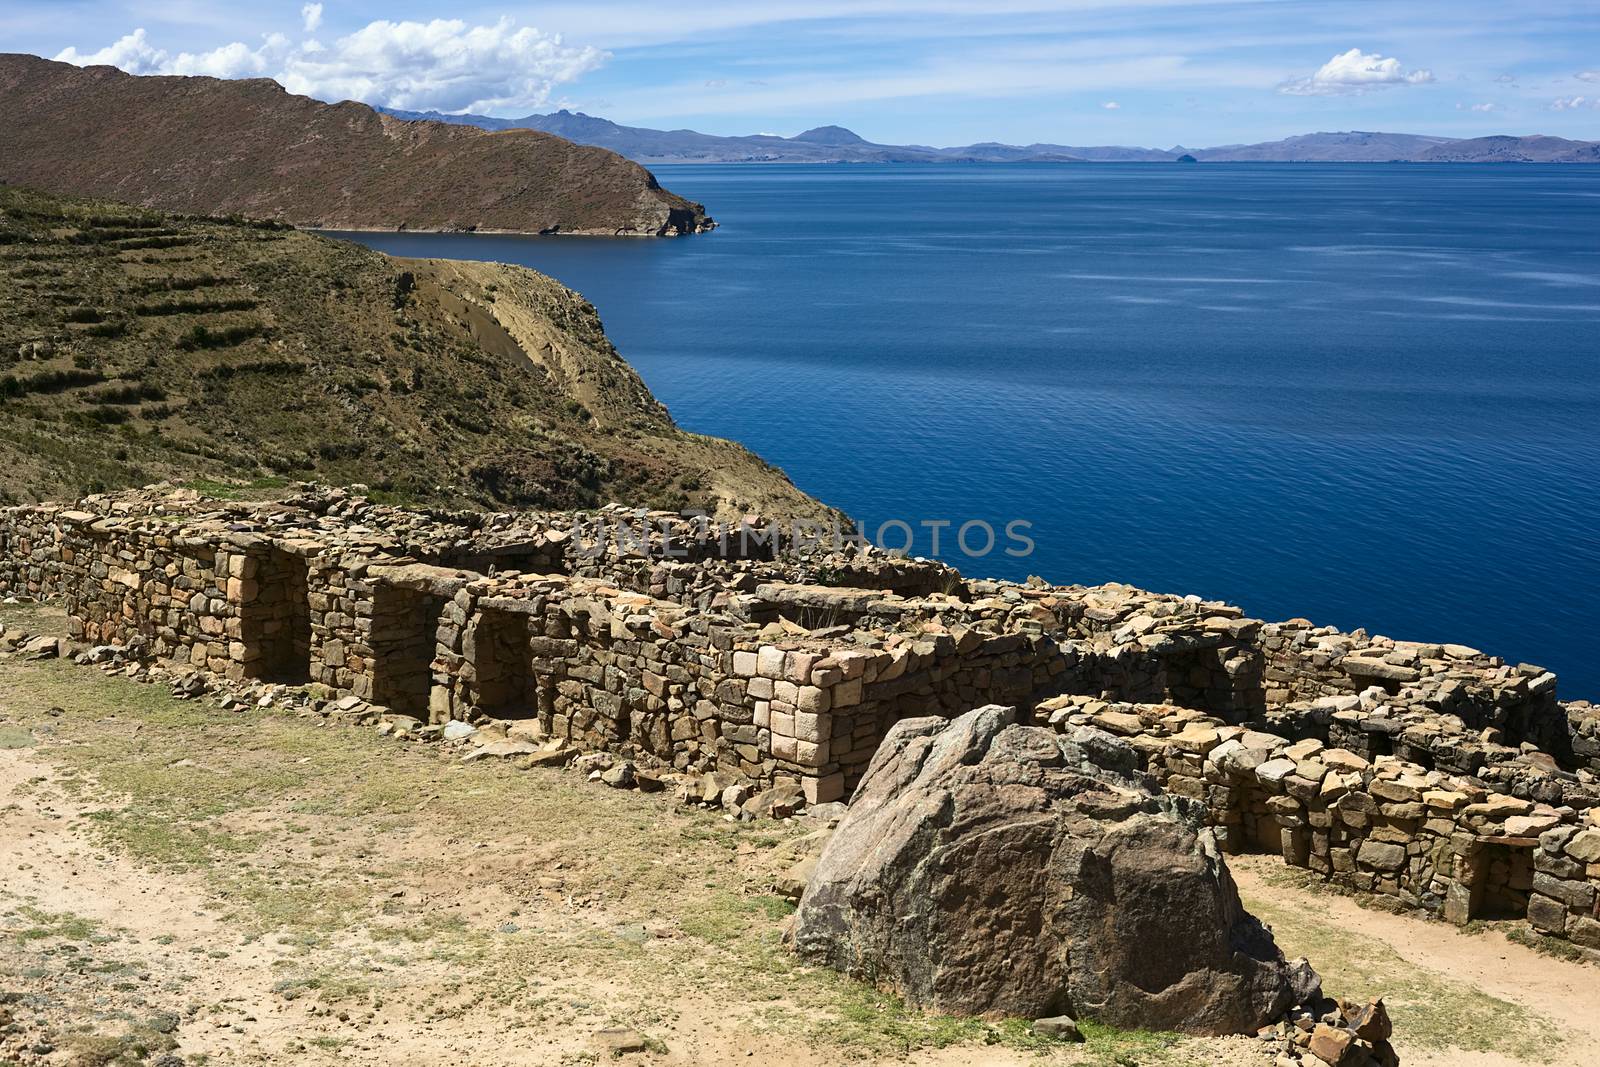 The ruins of Chinkana of Tiwanaku-Inca origin on Isla del Sol (Island of the Sun), a popular tourist destination in Lake Titicaca, Bolivia